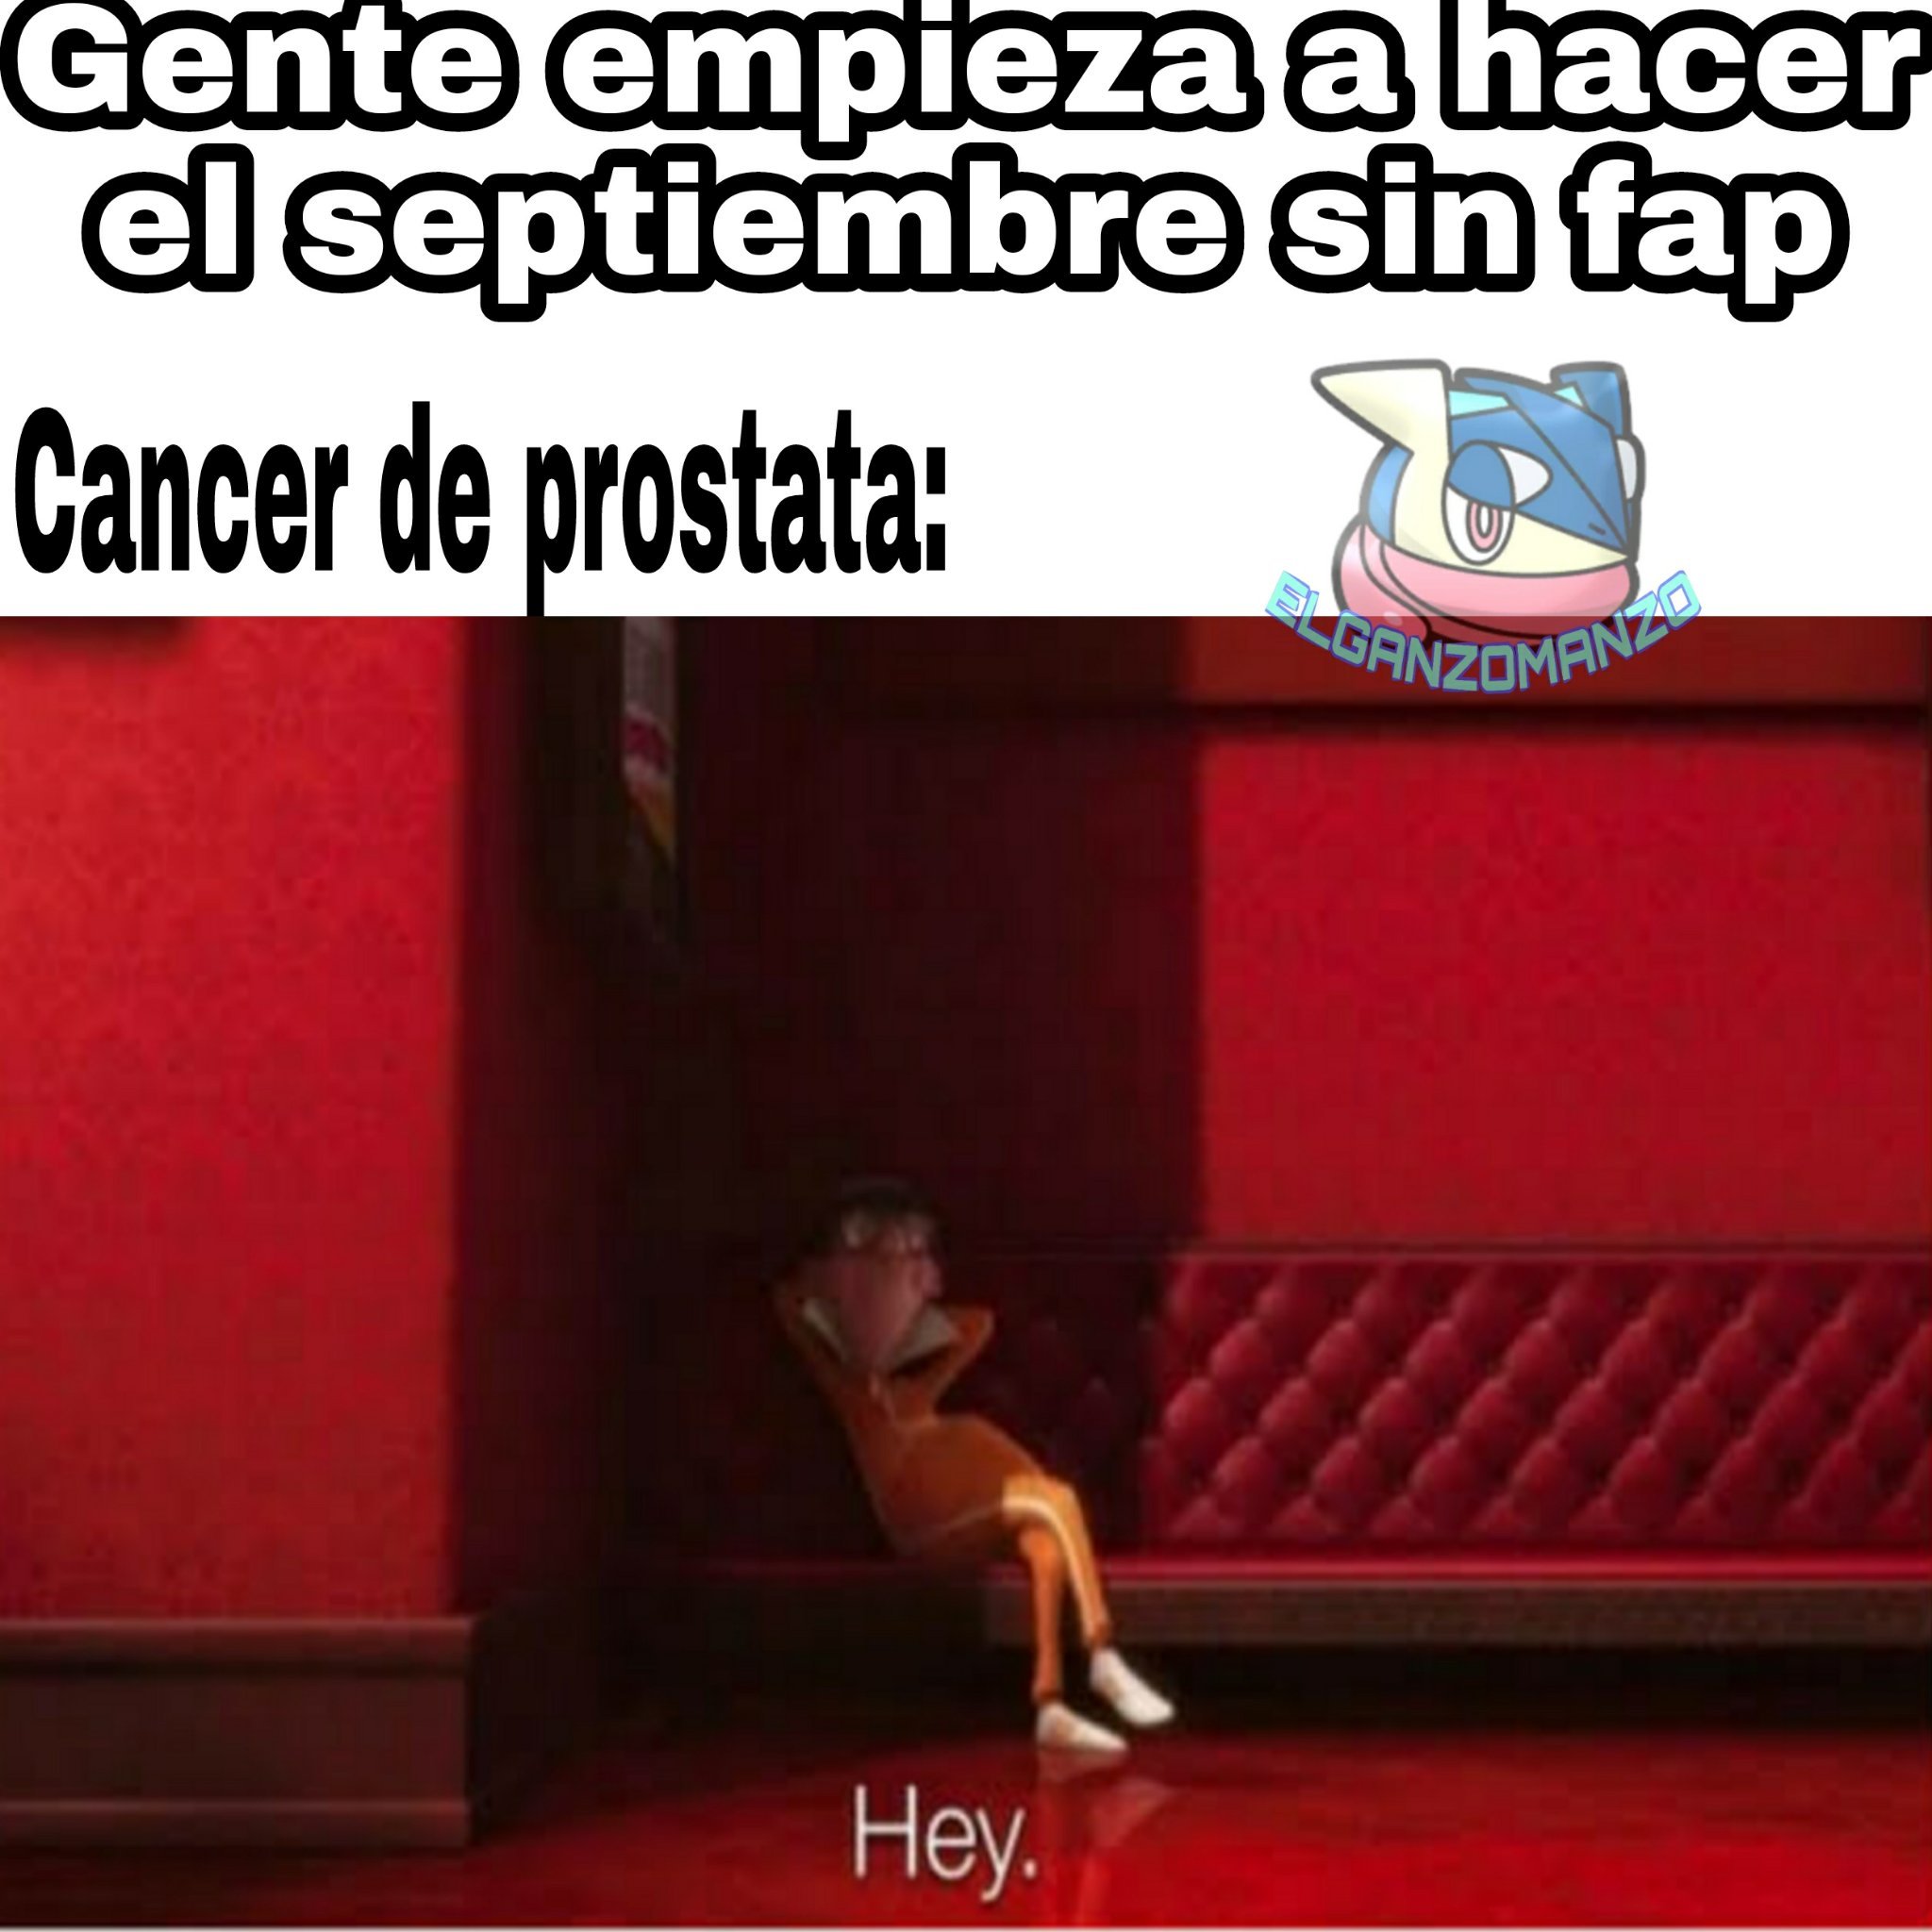 RECUERDEN JALARSE EL PILIN PARA EVITAR CANCER DE PROSTATA! - meme